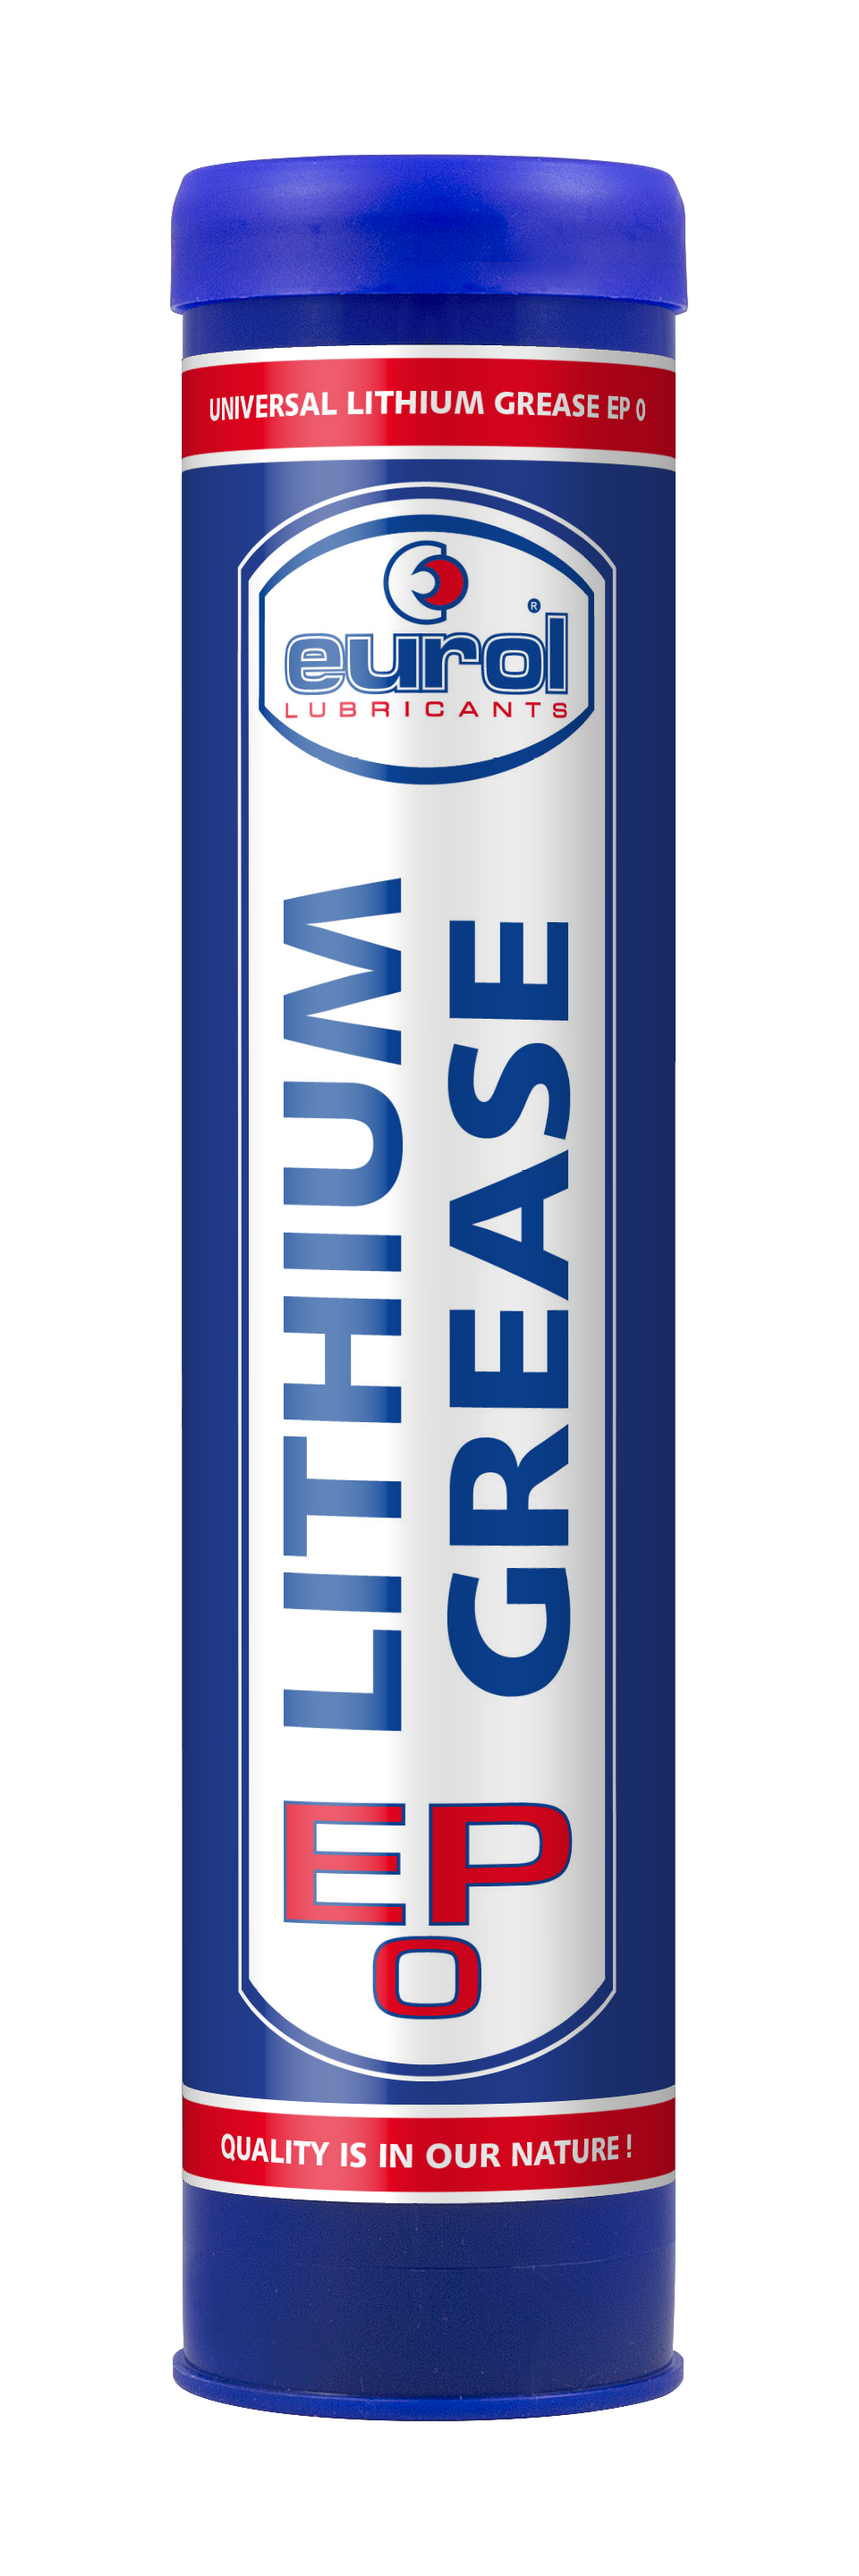 Eurol Lithium Grease EP 0, 400 gr